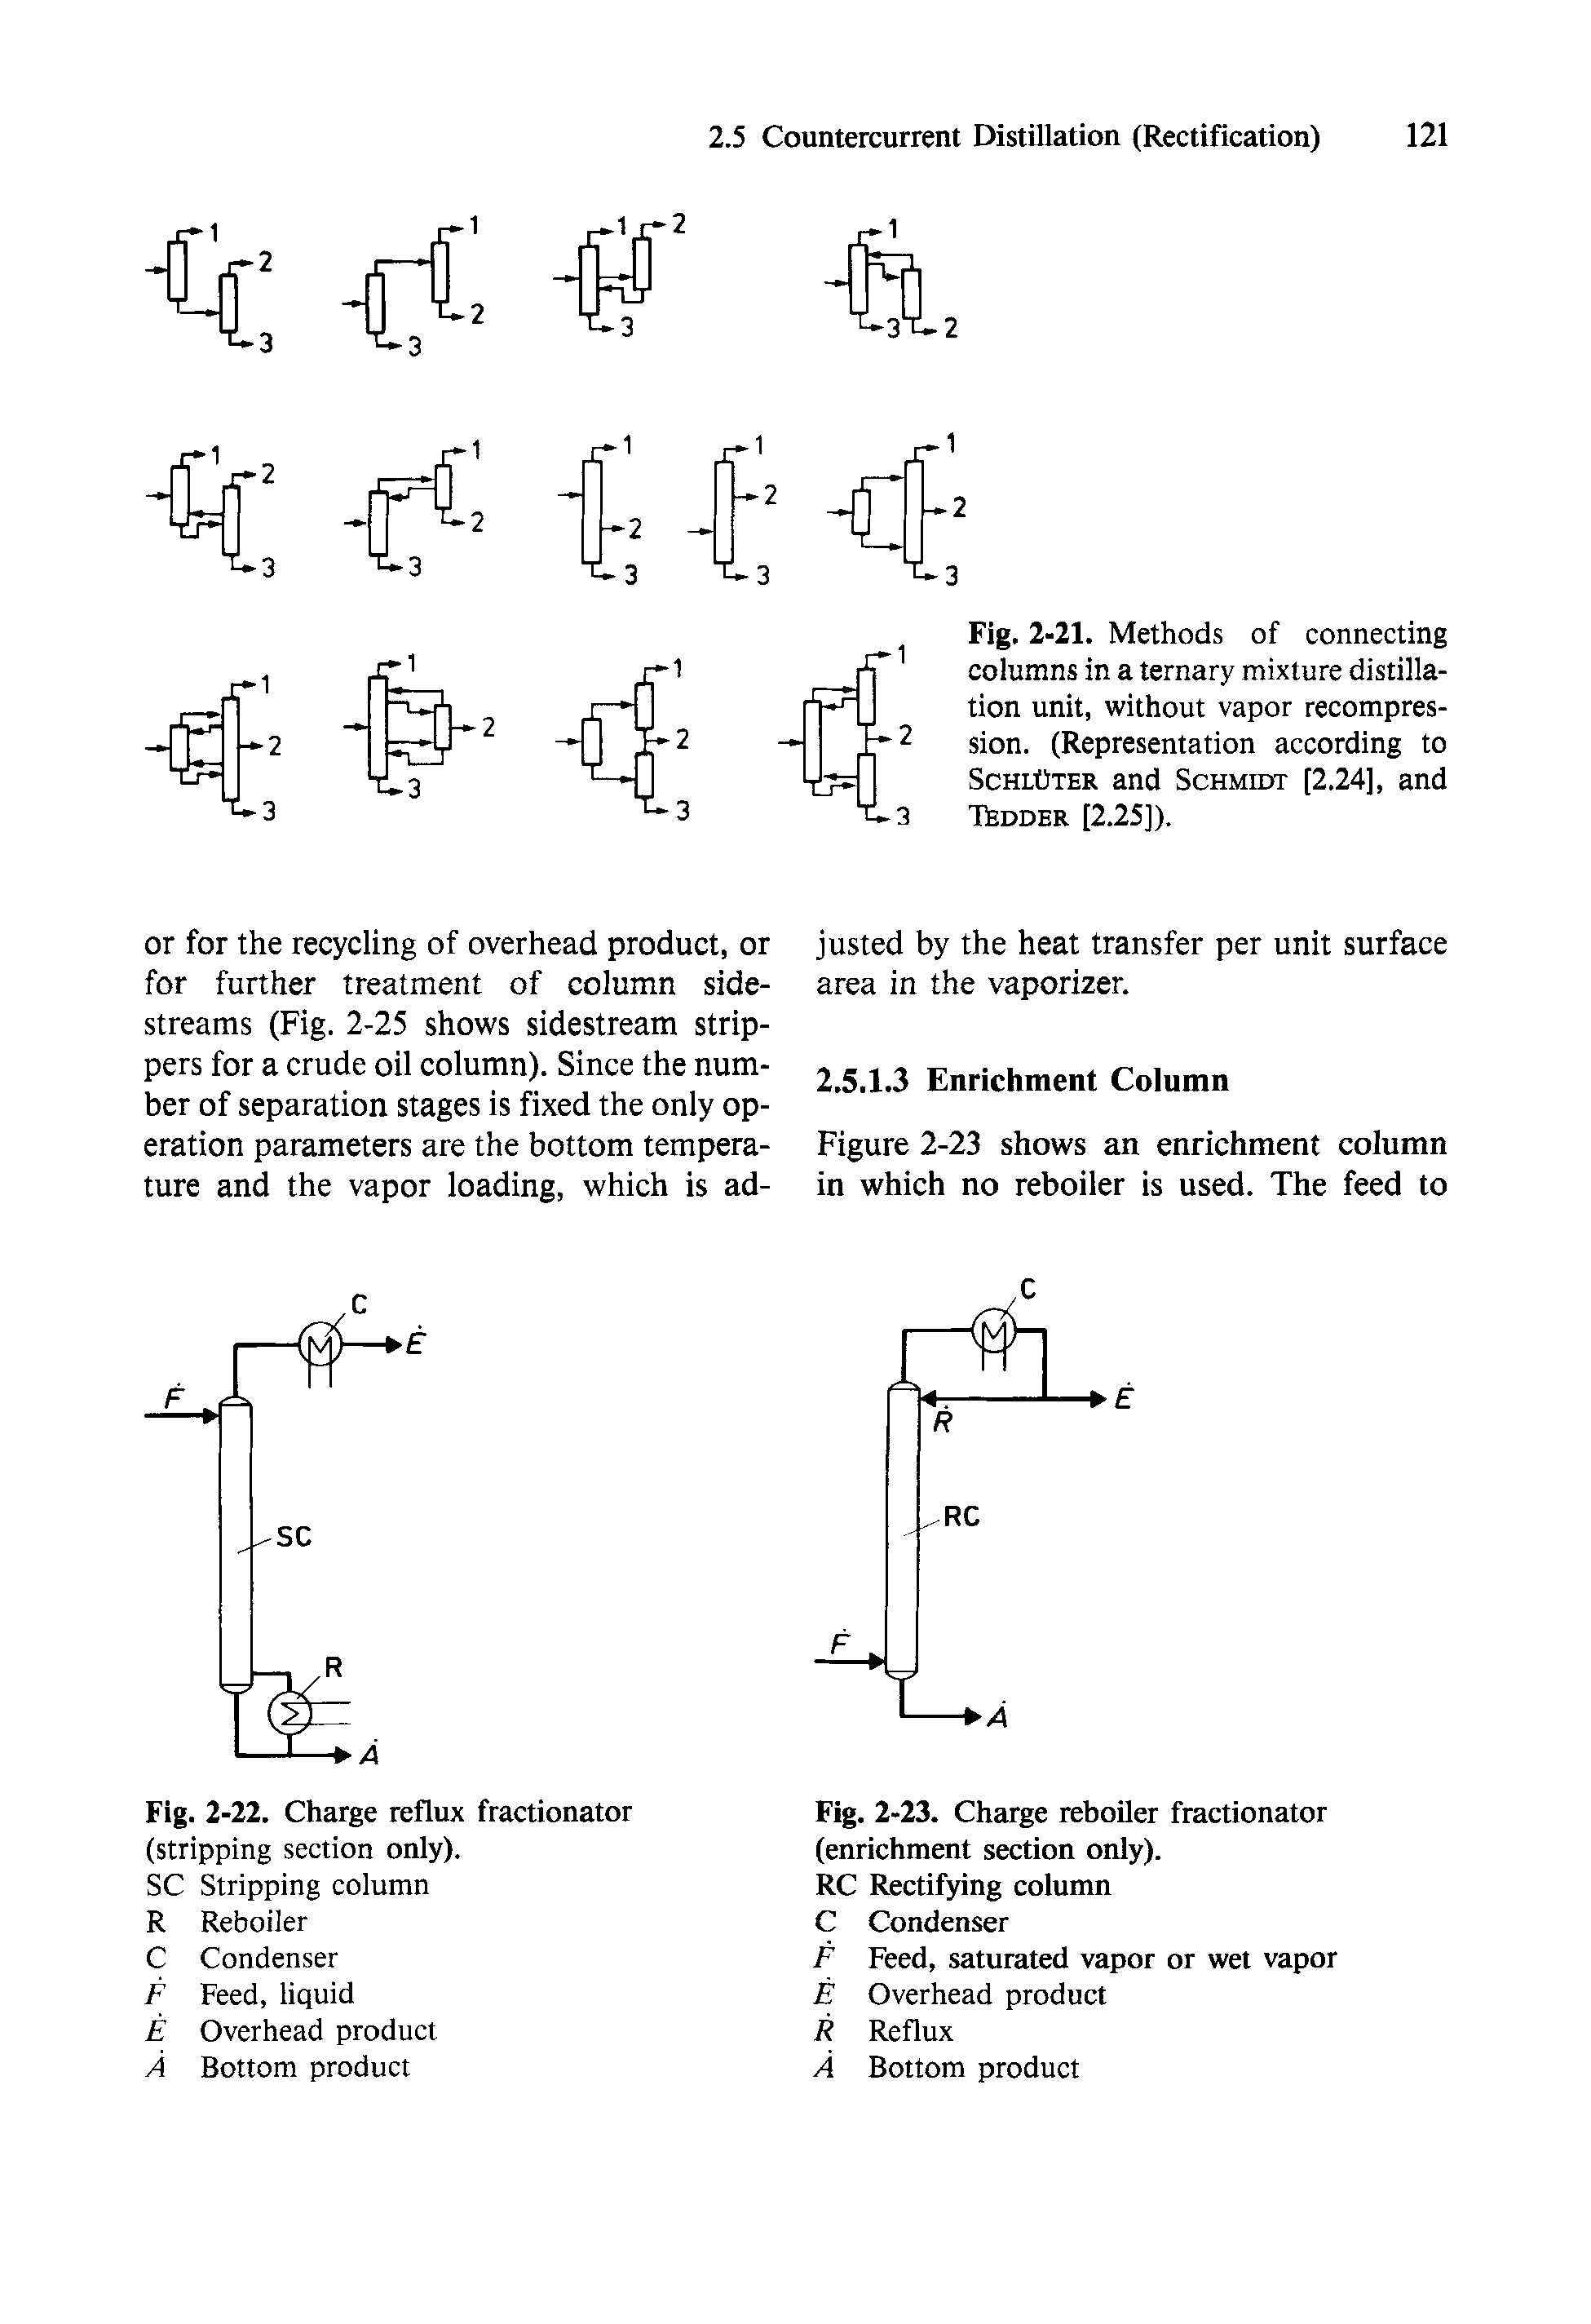 Fig. 2-23. Charge reboiler fractionator (enrichment section only).